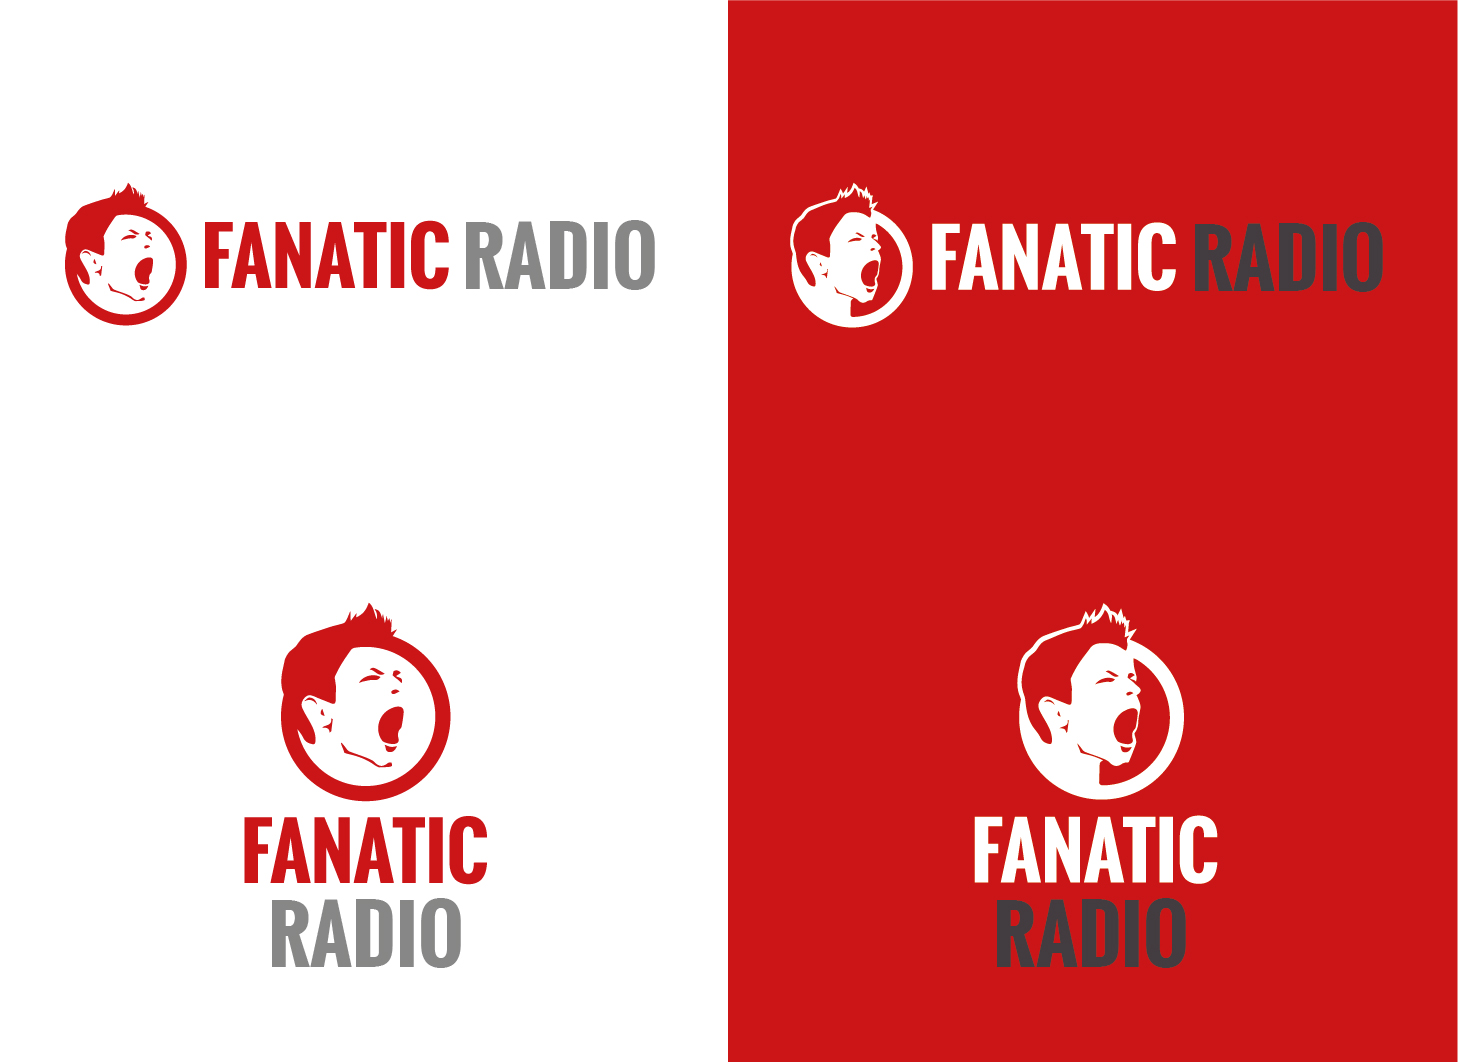 Fanatic-Radio-02.jpg